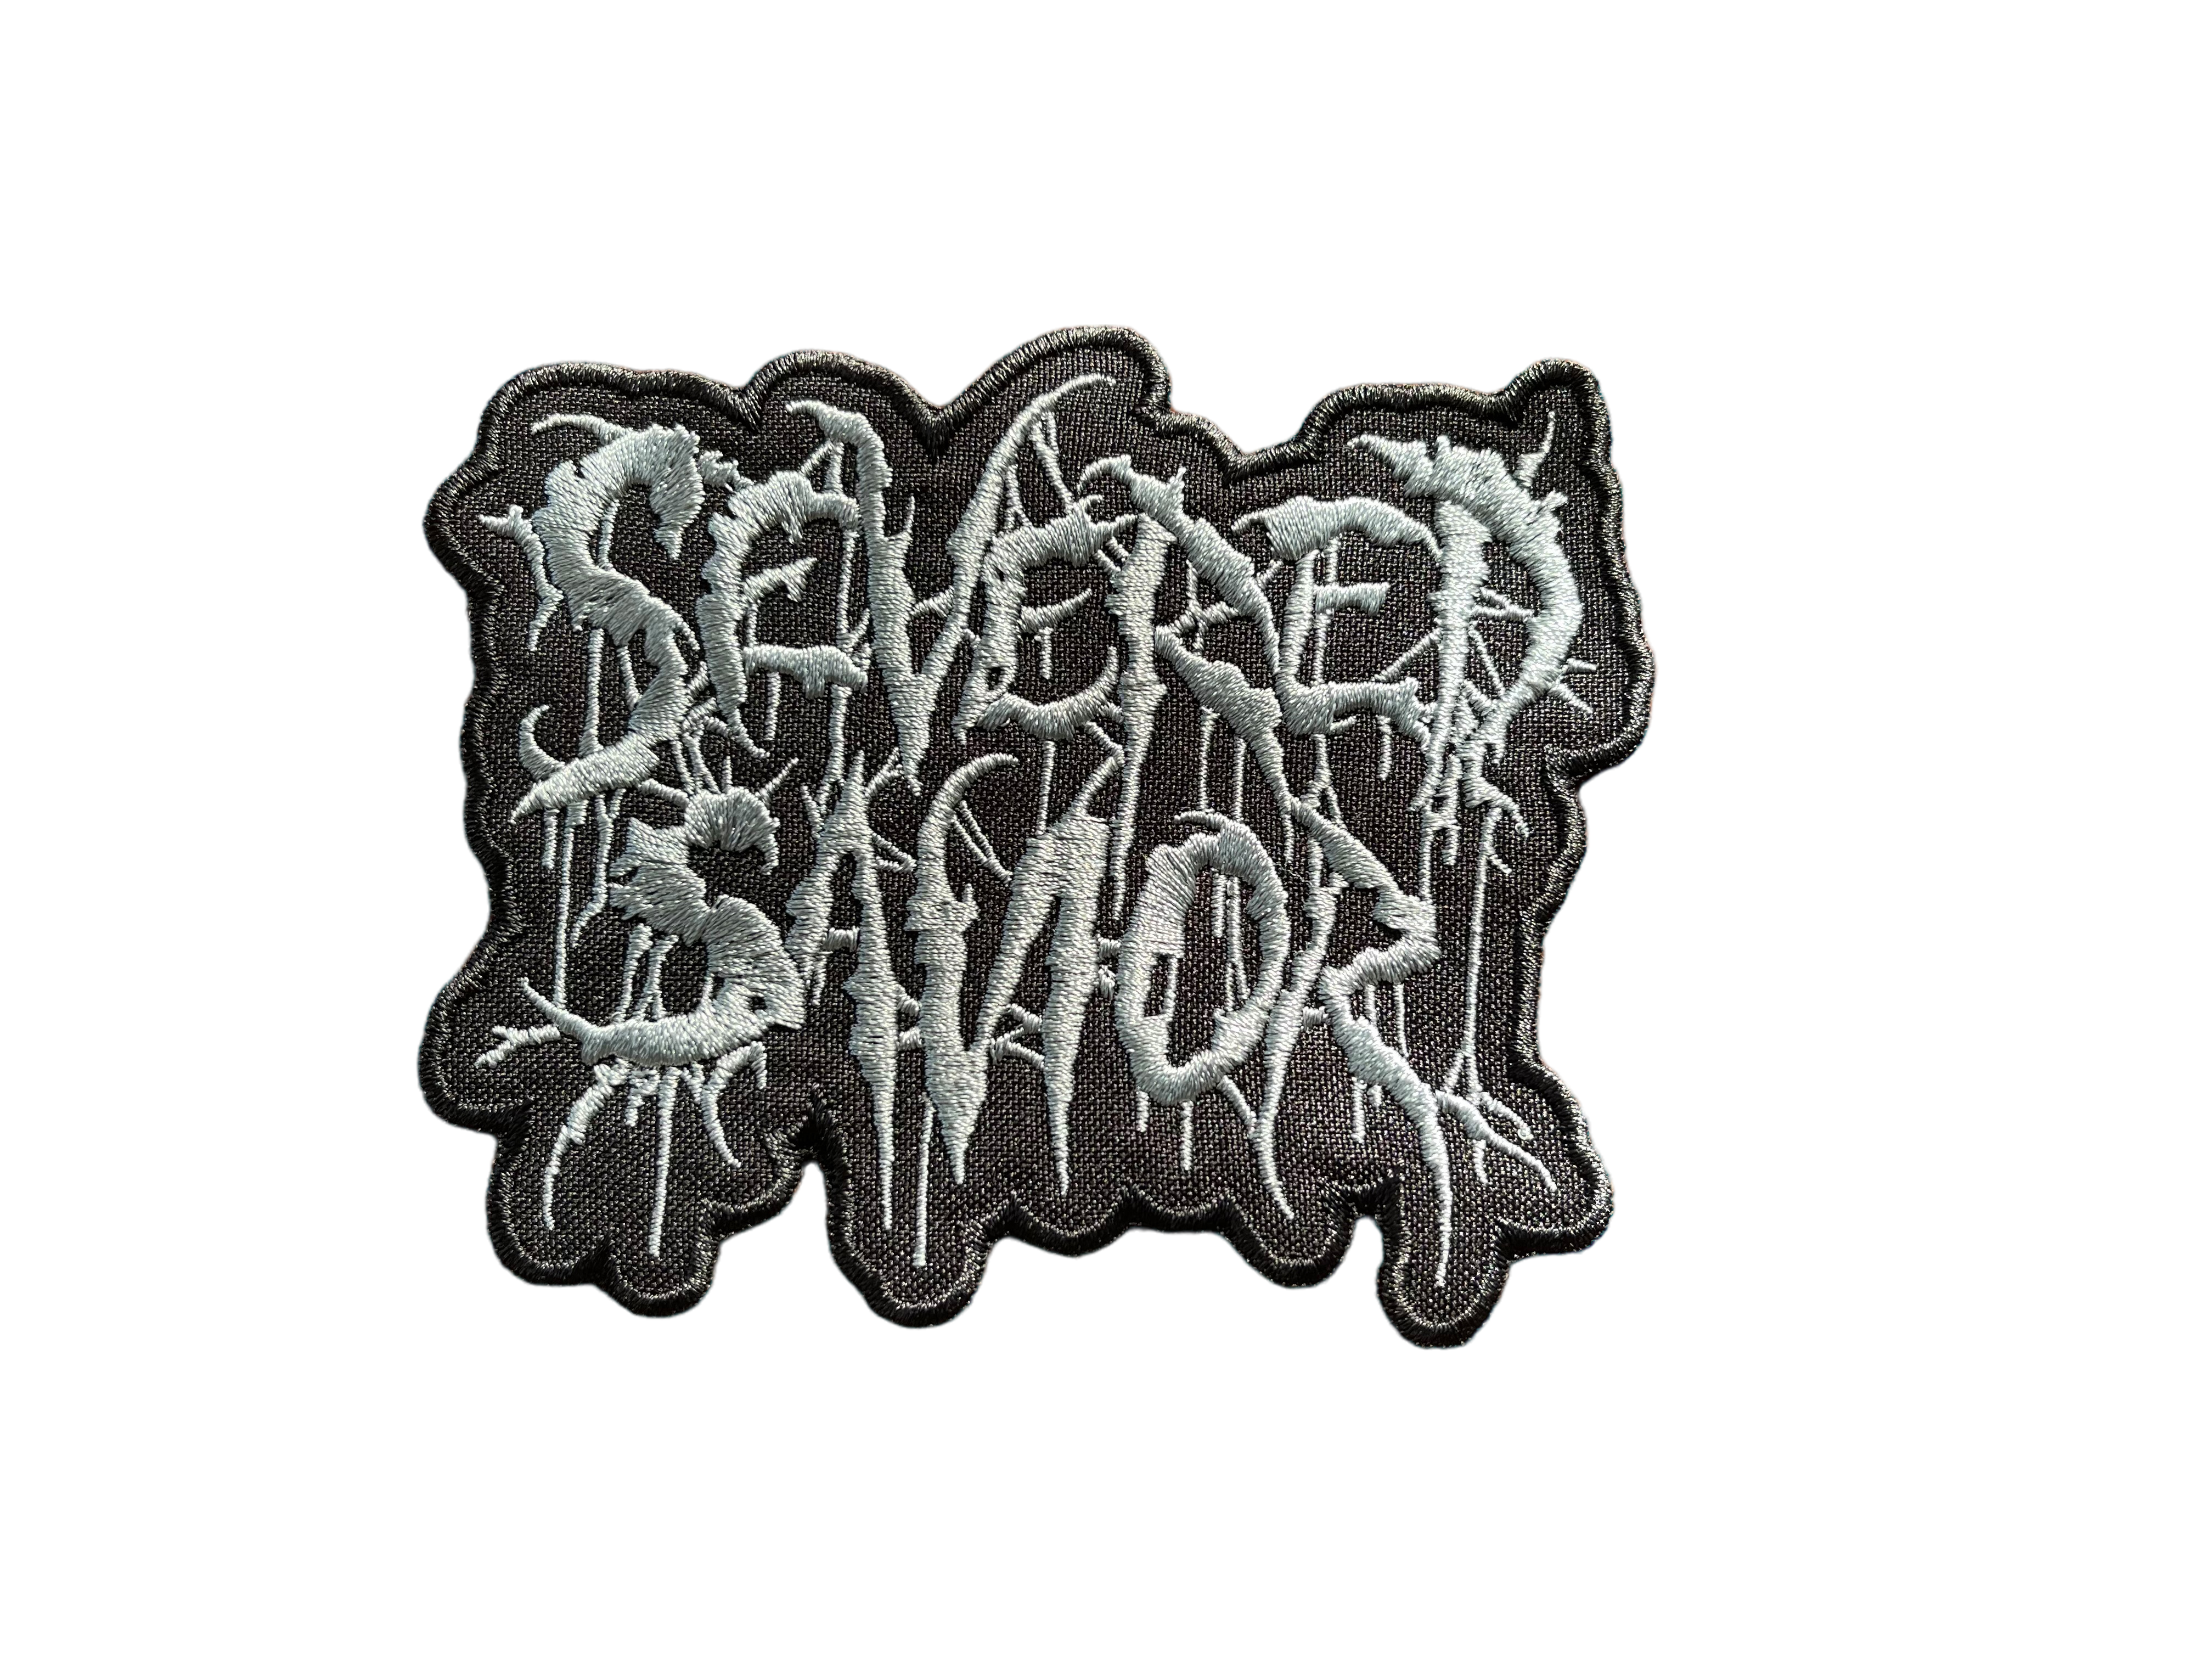 Severed Savior Logo Patch - Silver